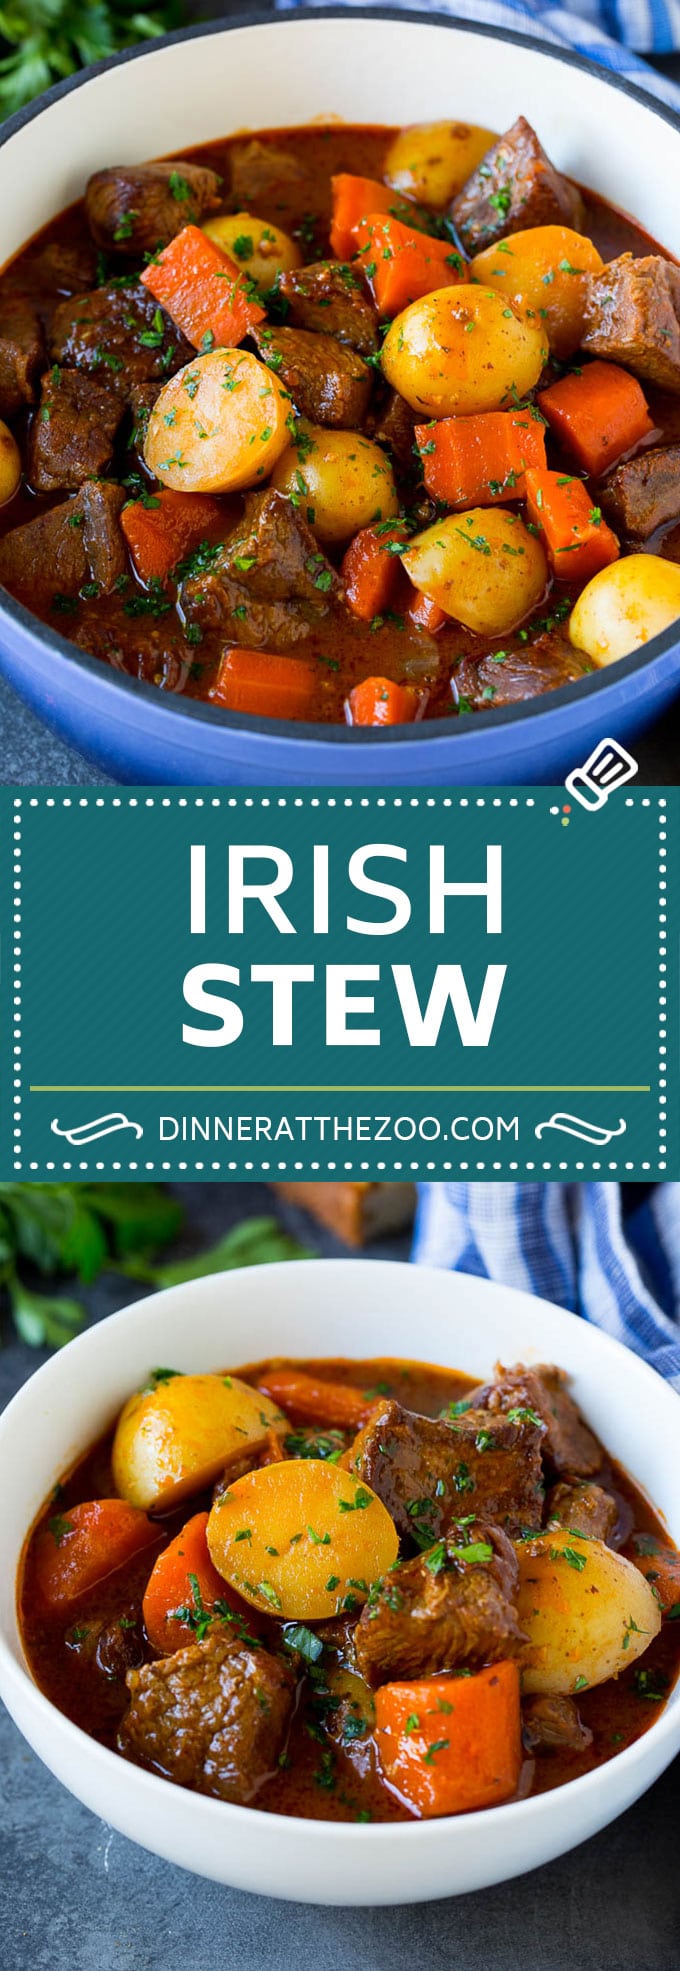 Irish Stew Recipe | Beef Stew #stew #soup #beef #carrots #potatoes #beer #stpatricksday #dinner #dinneratthezoo